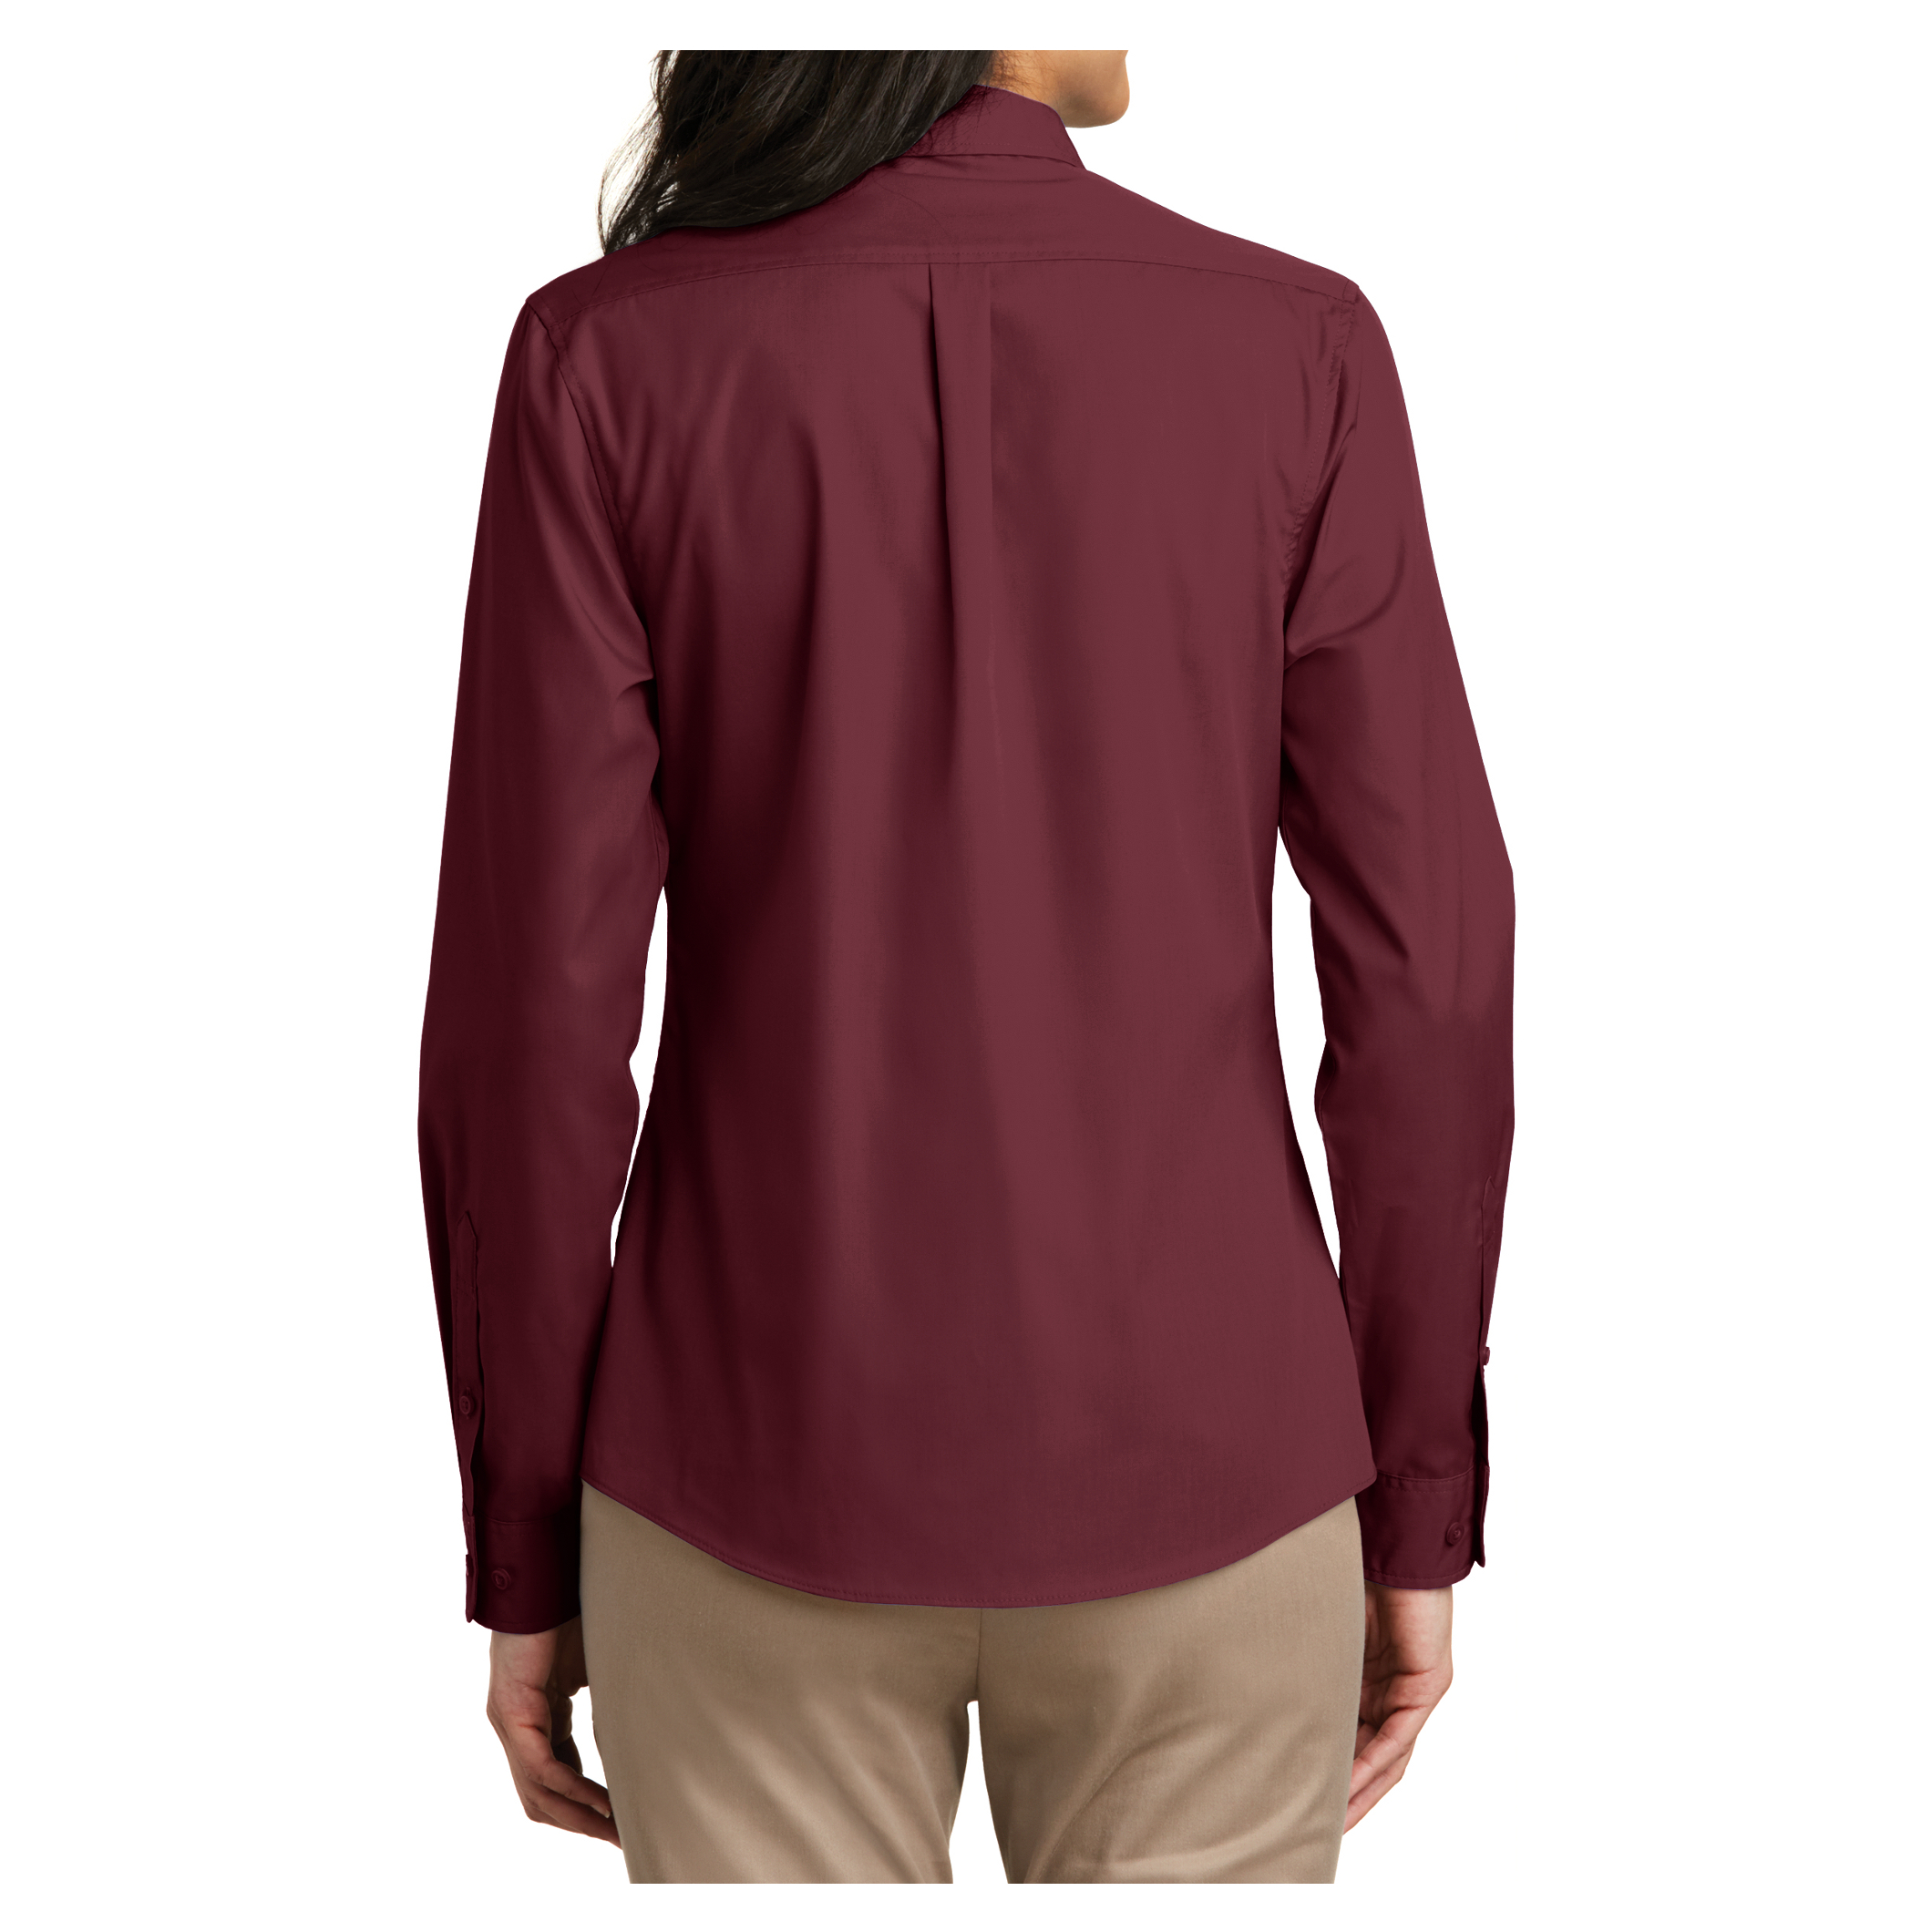 Mafoose Women Cotton/Polyester Female Shirt Burgundy XS - image 3 of 6